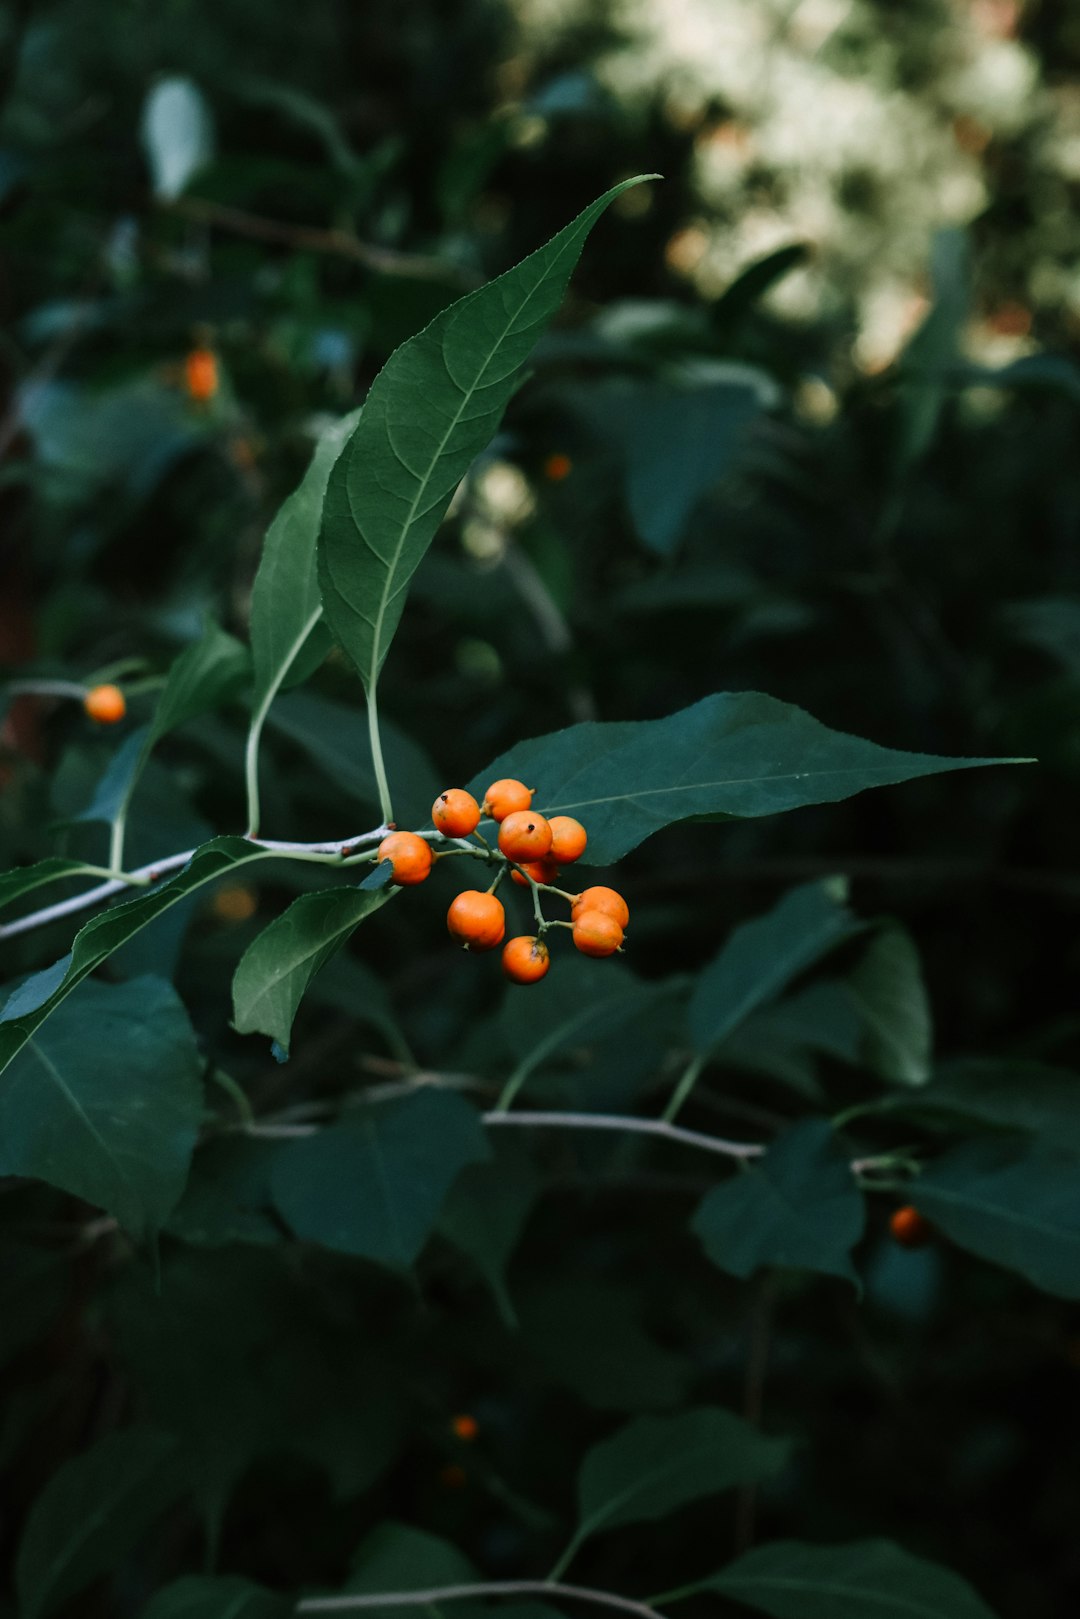 orange round fruits on green leaves